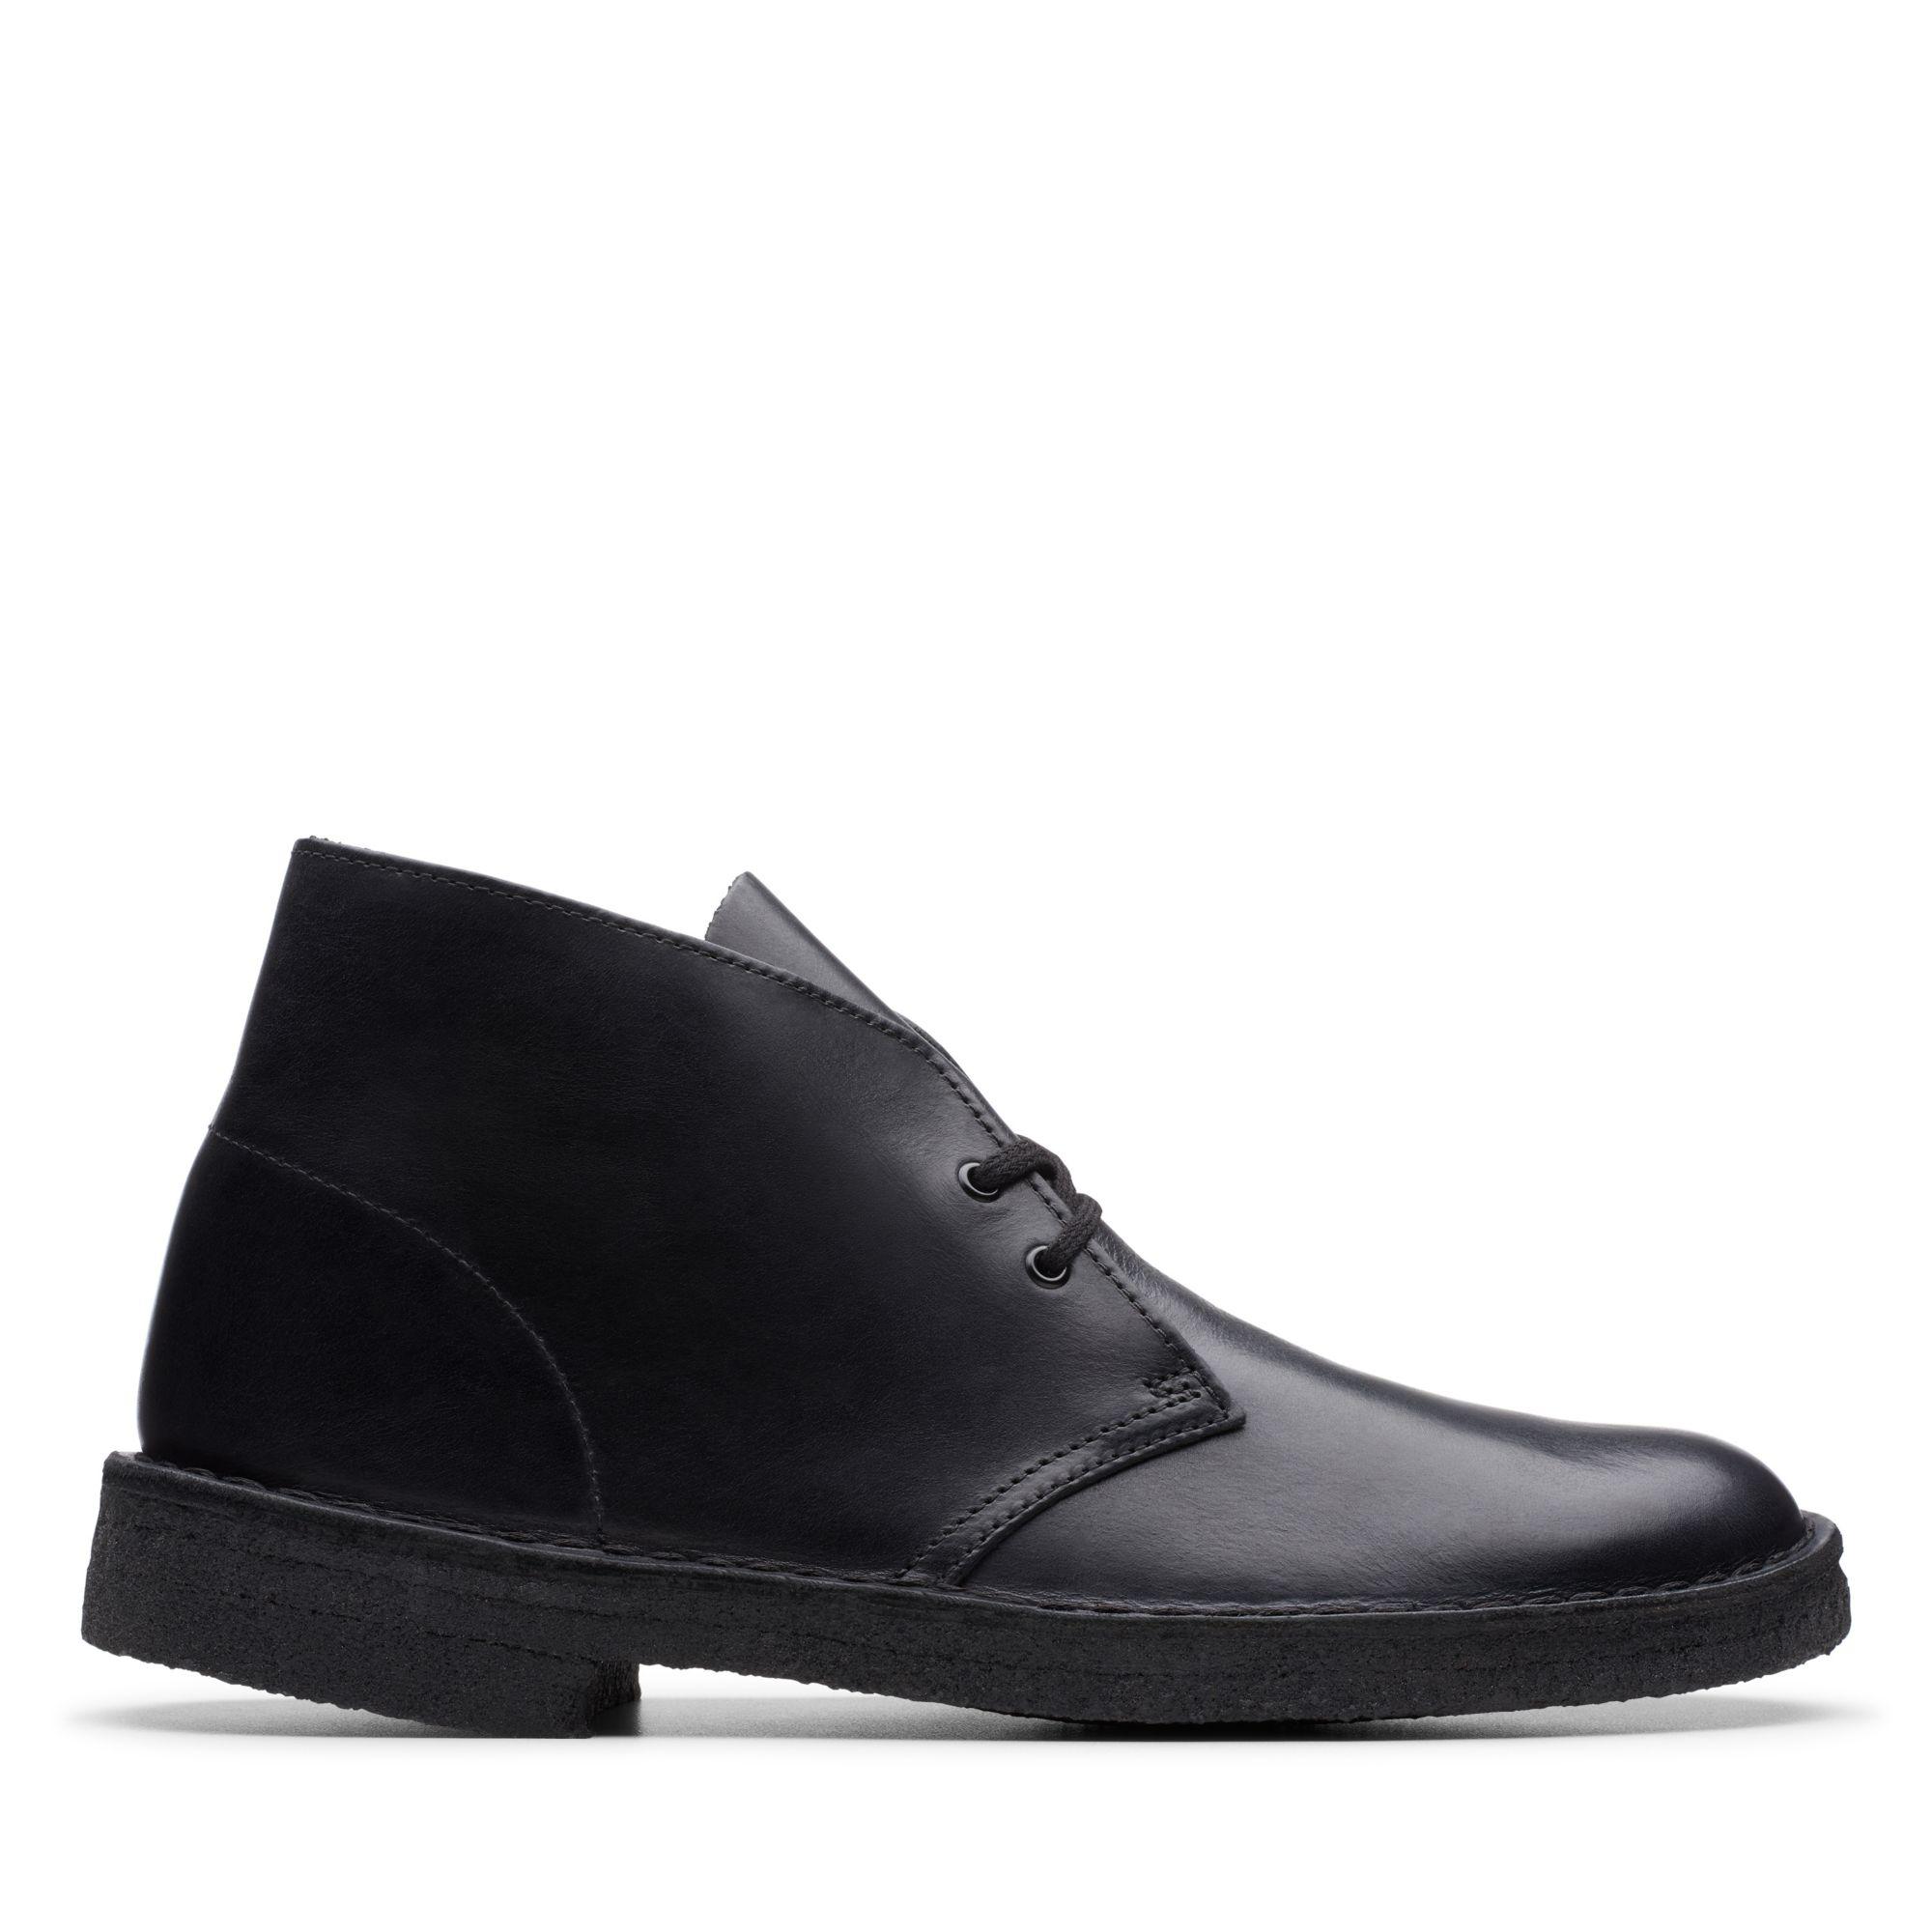 Clarks Leather Desert Boot in Black Polished (Black) for Men - Lyst